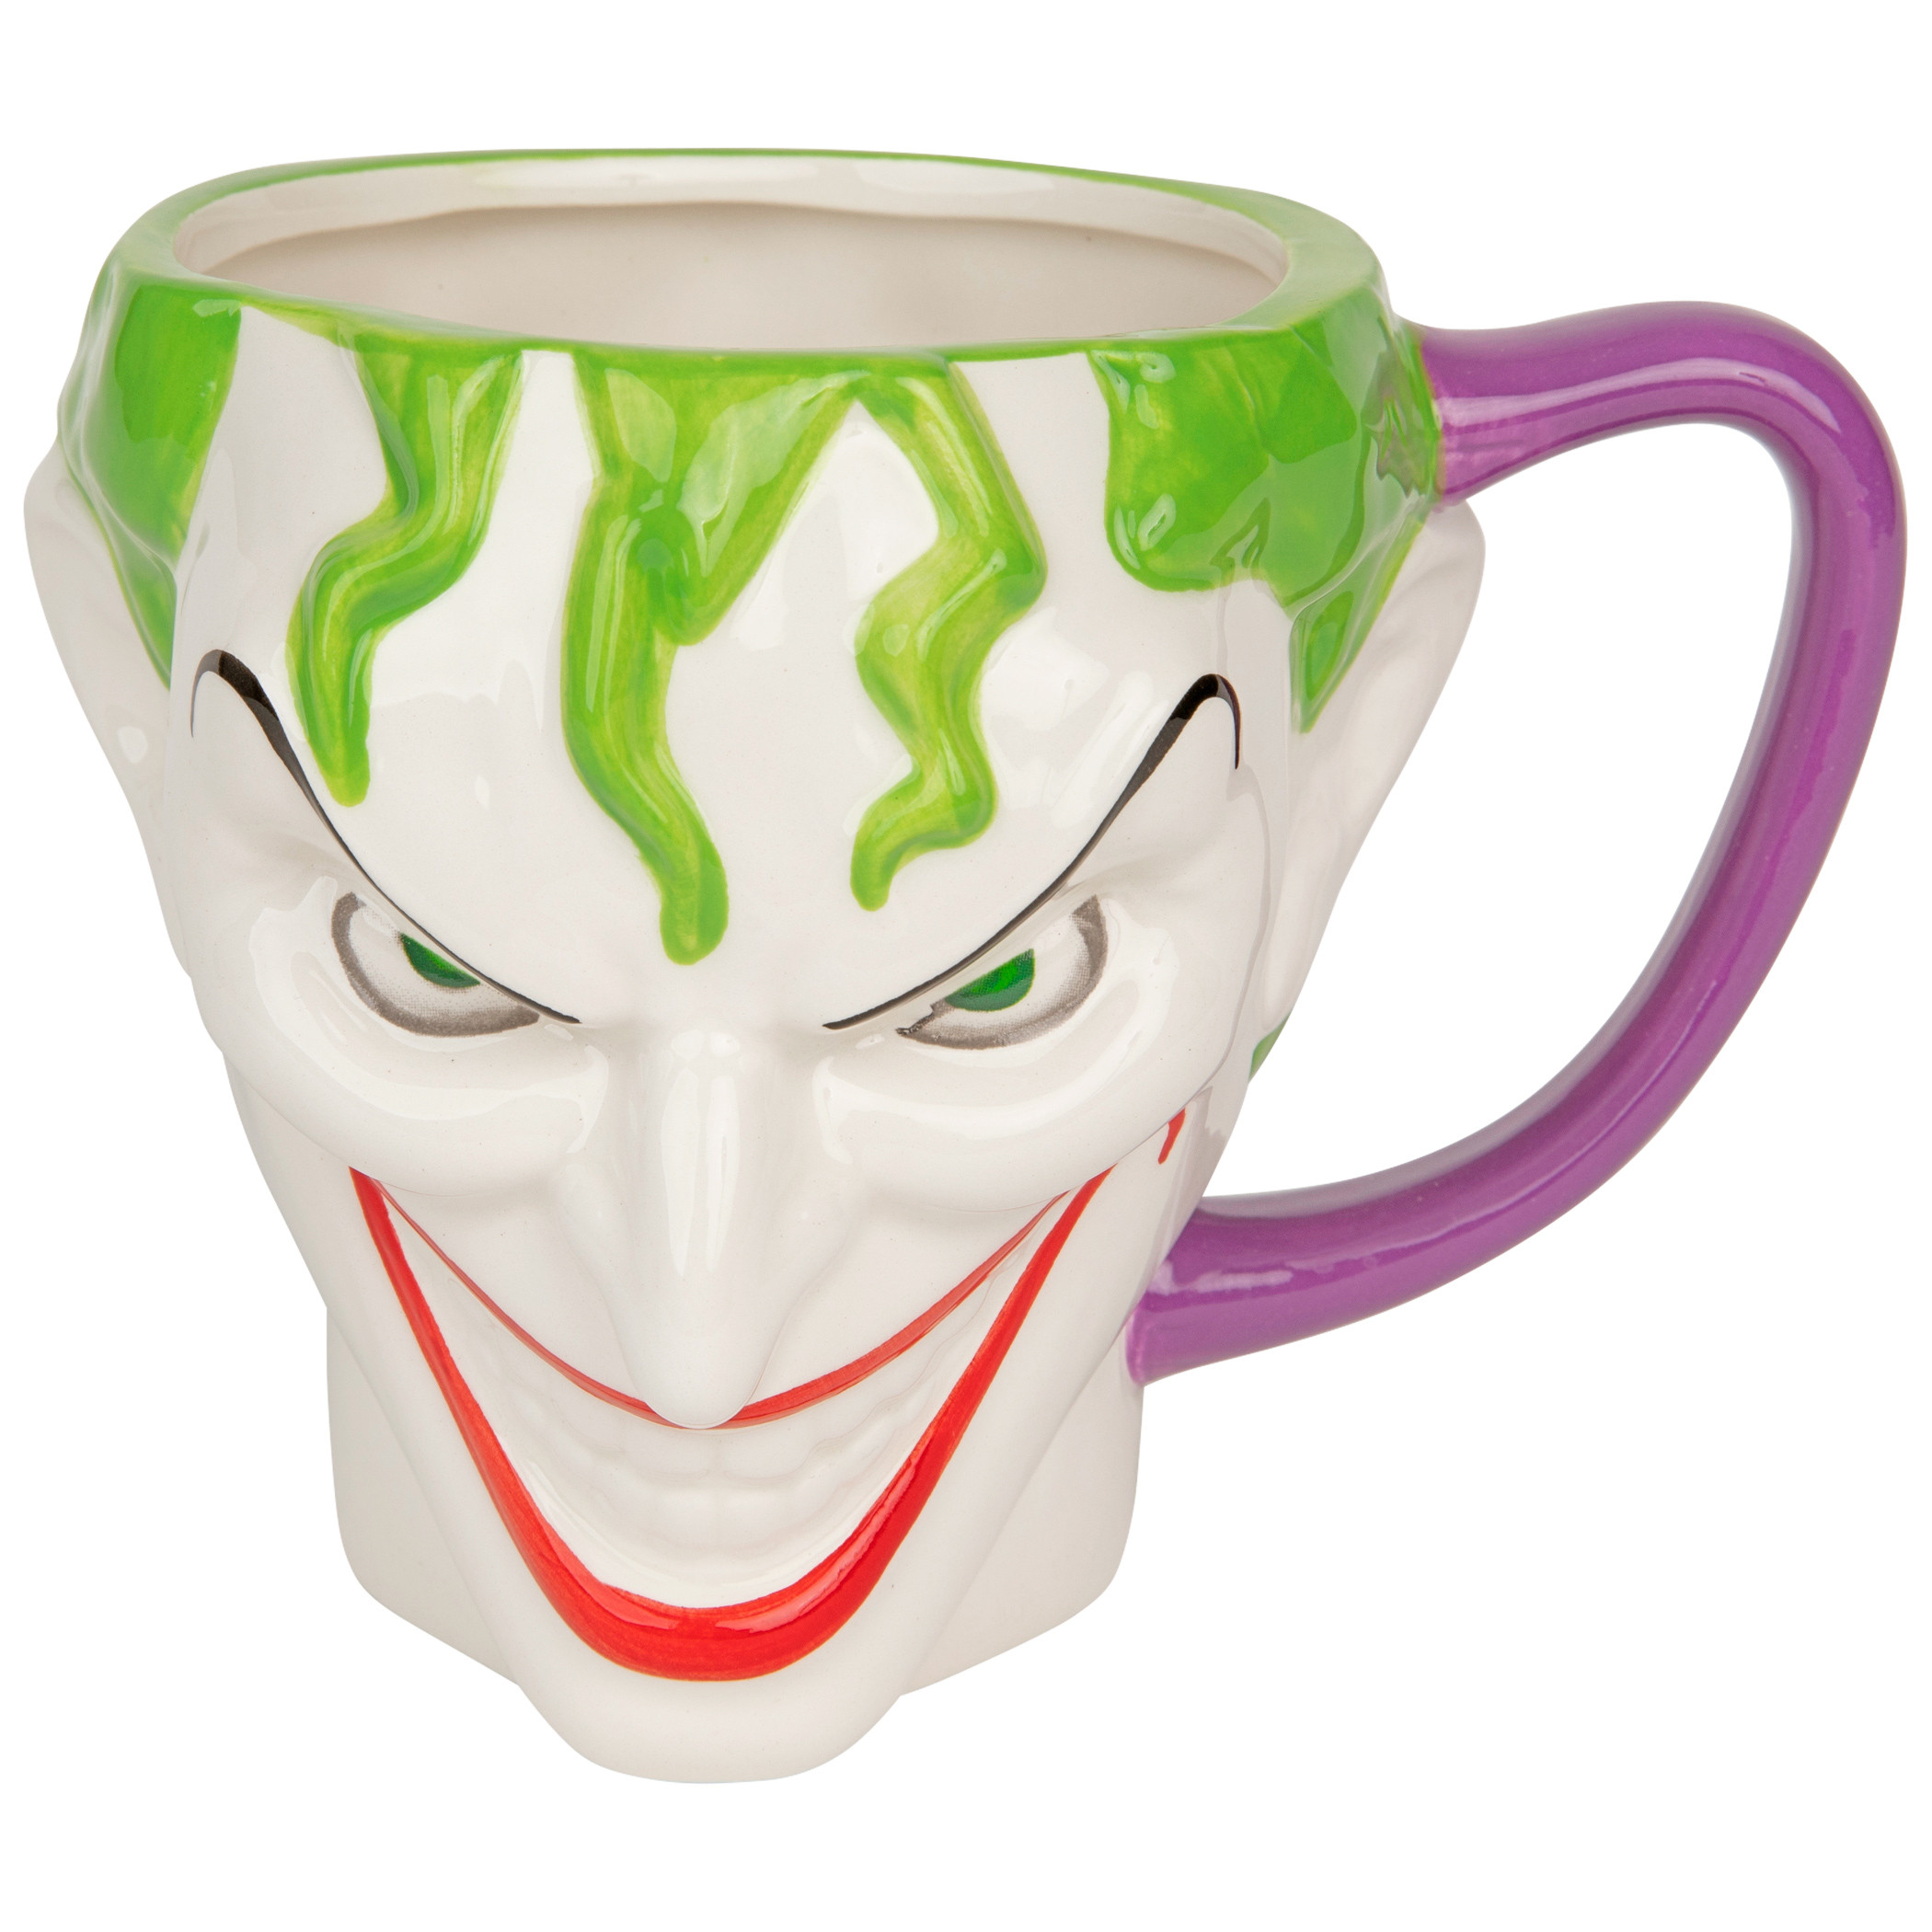 DC Comics The Joker Evil Smile 3D Sculpted Ceramic Mug